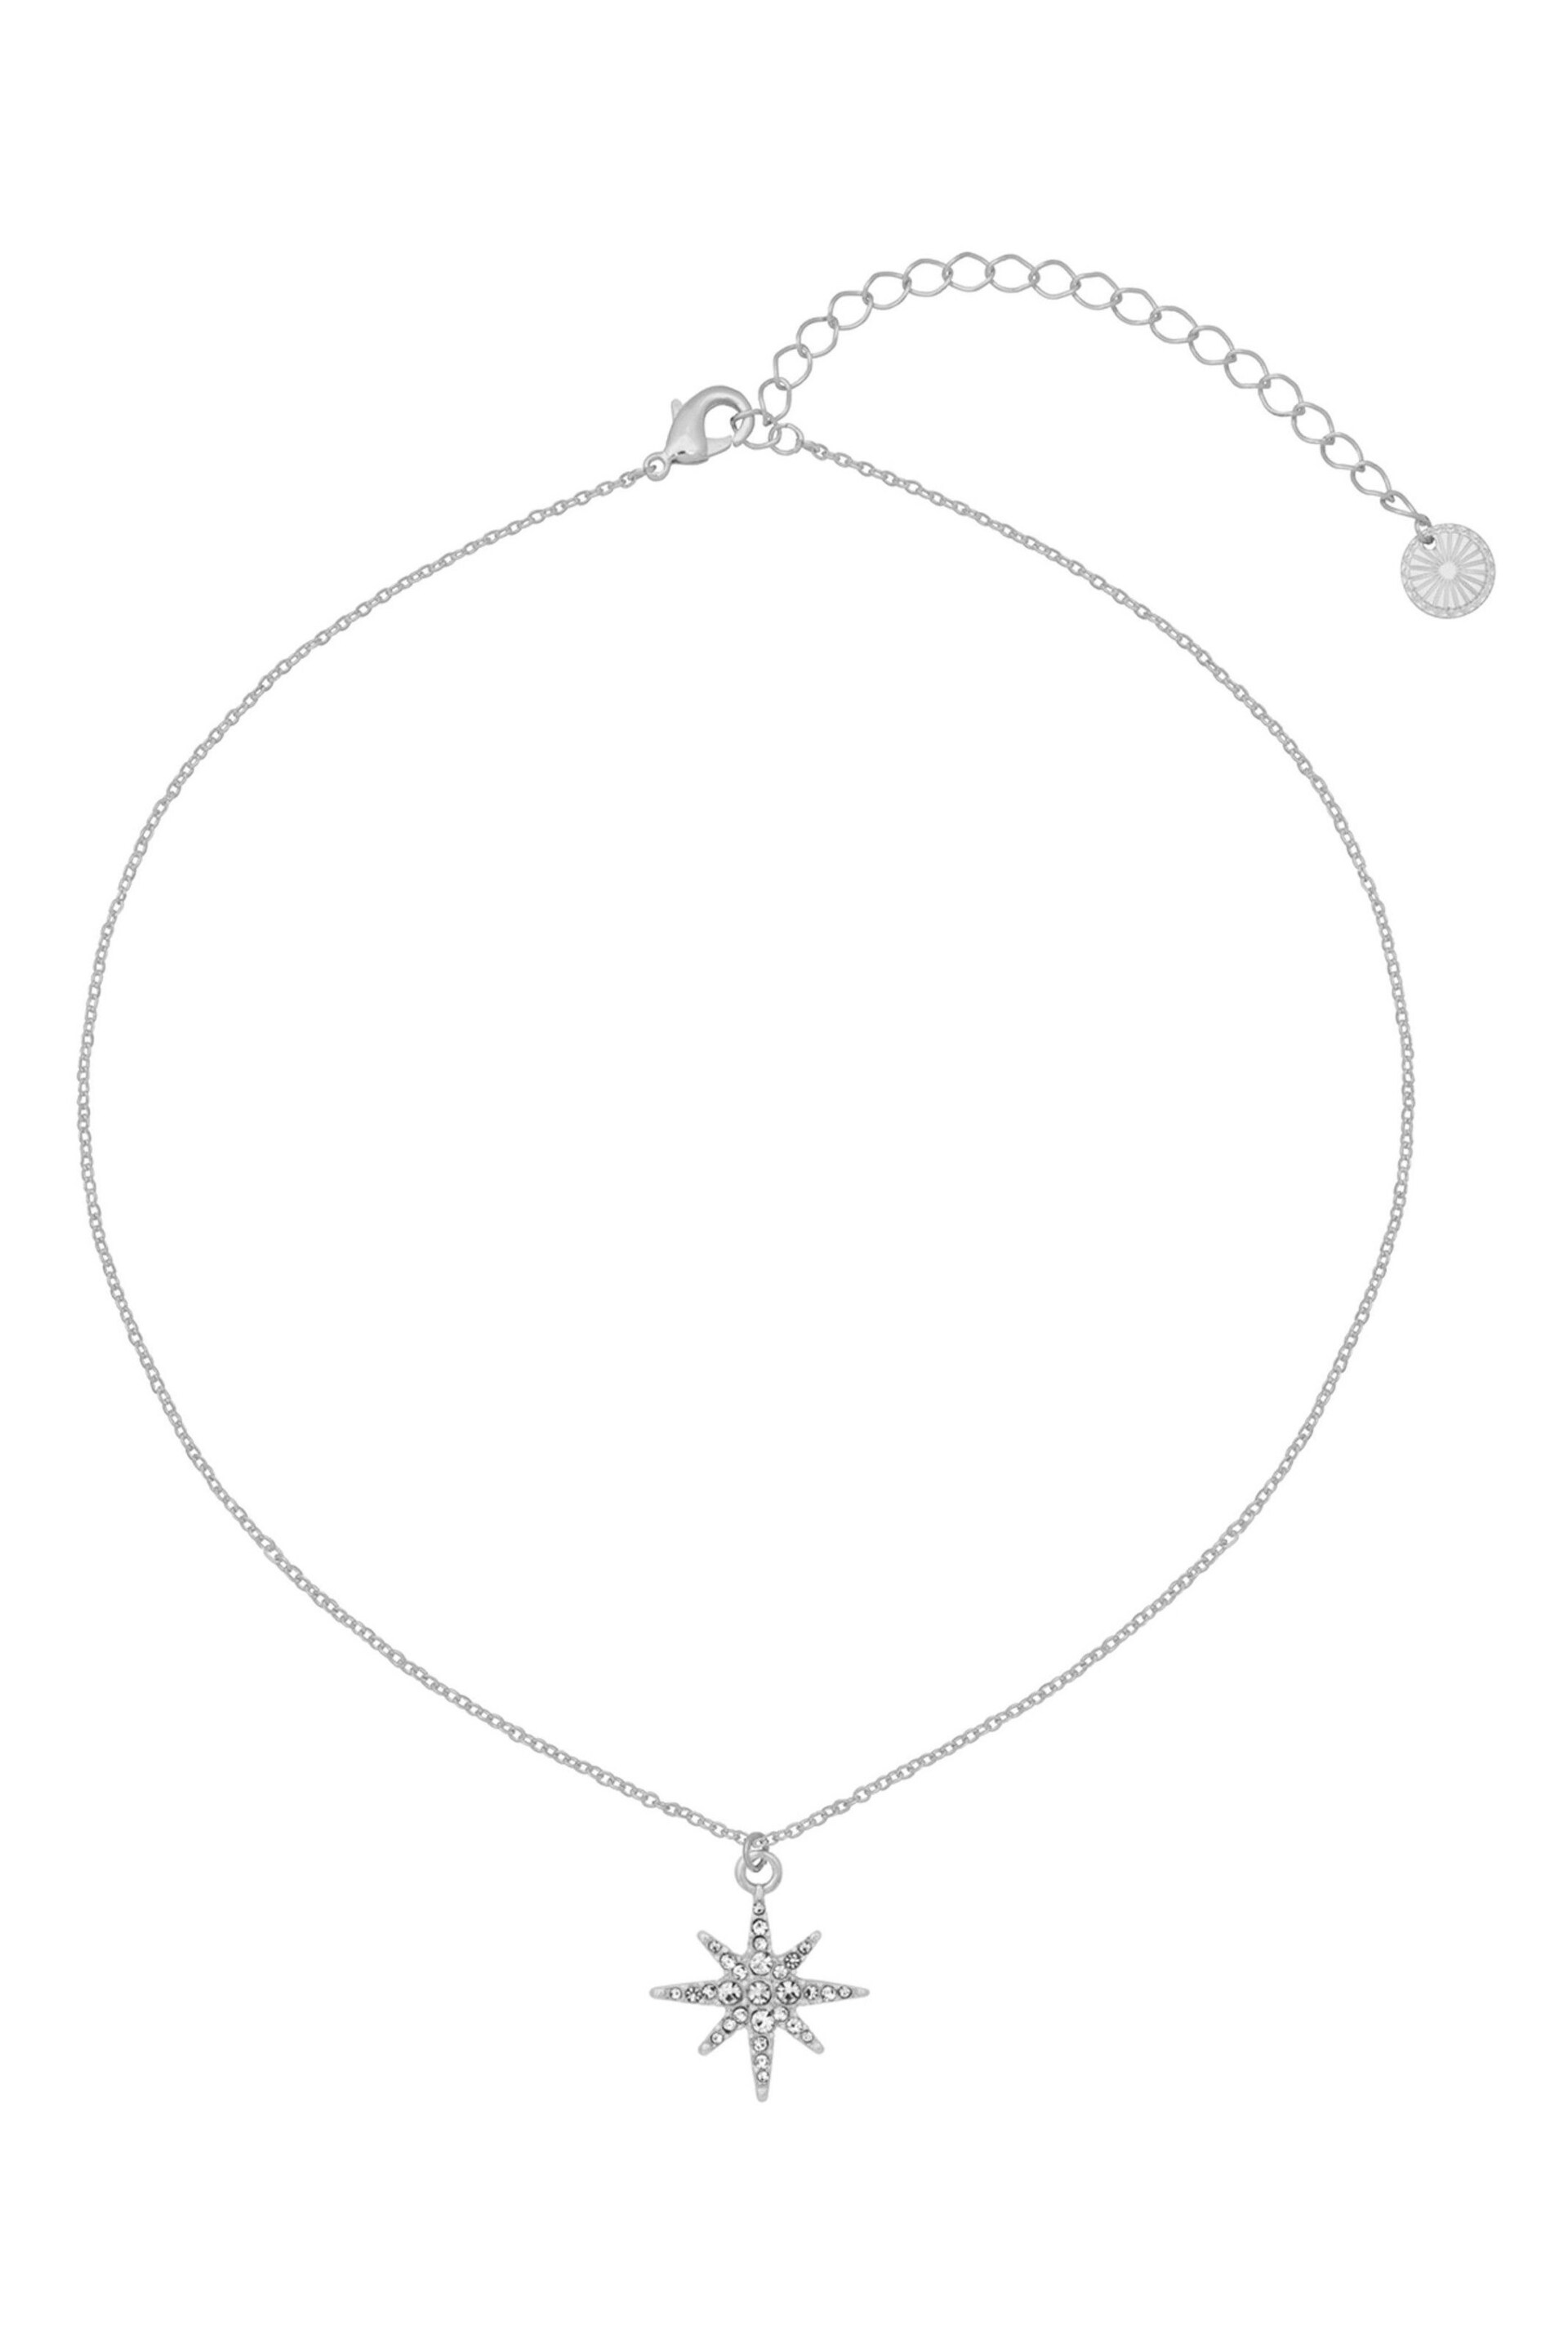 Caramel Jewellery London Silver Superstar Necklace - Image 1 of 8